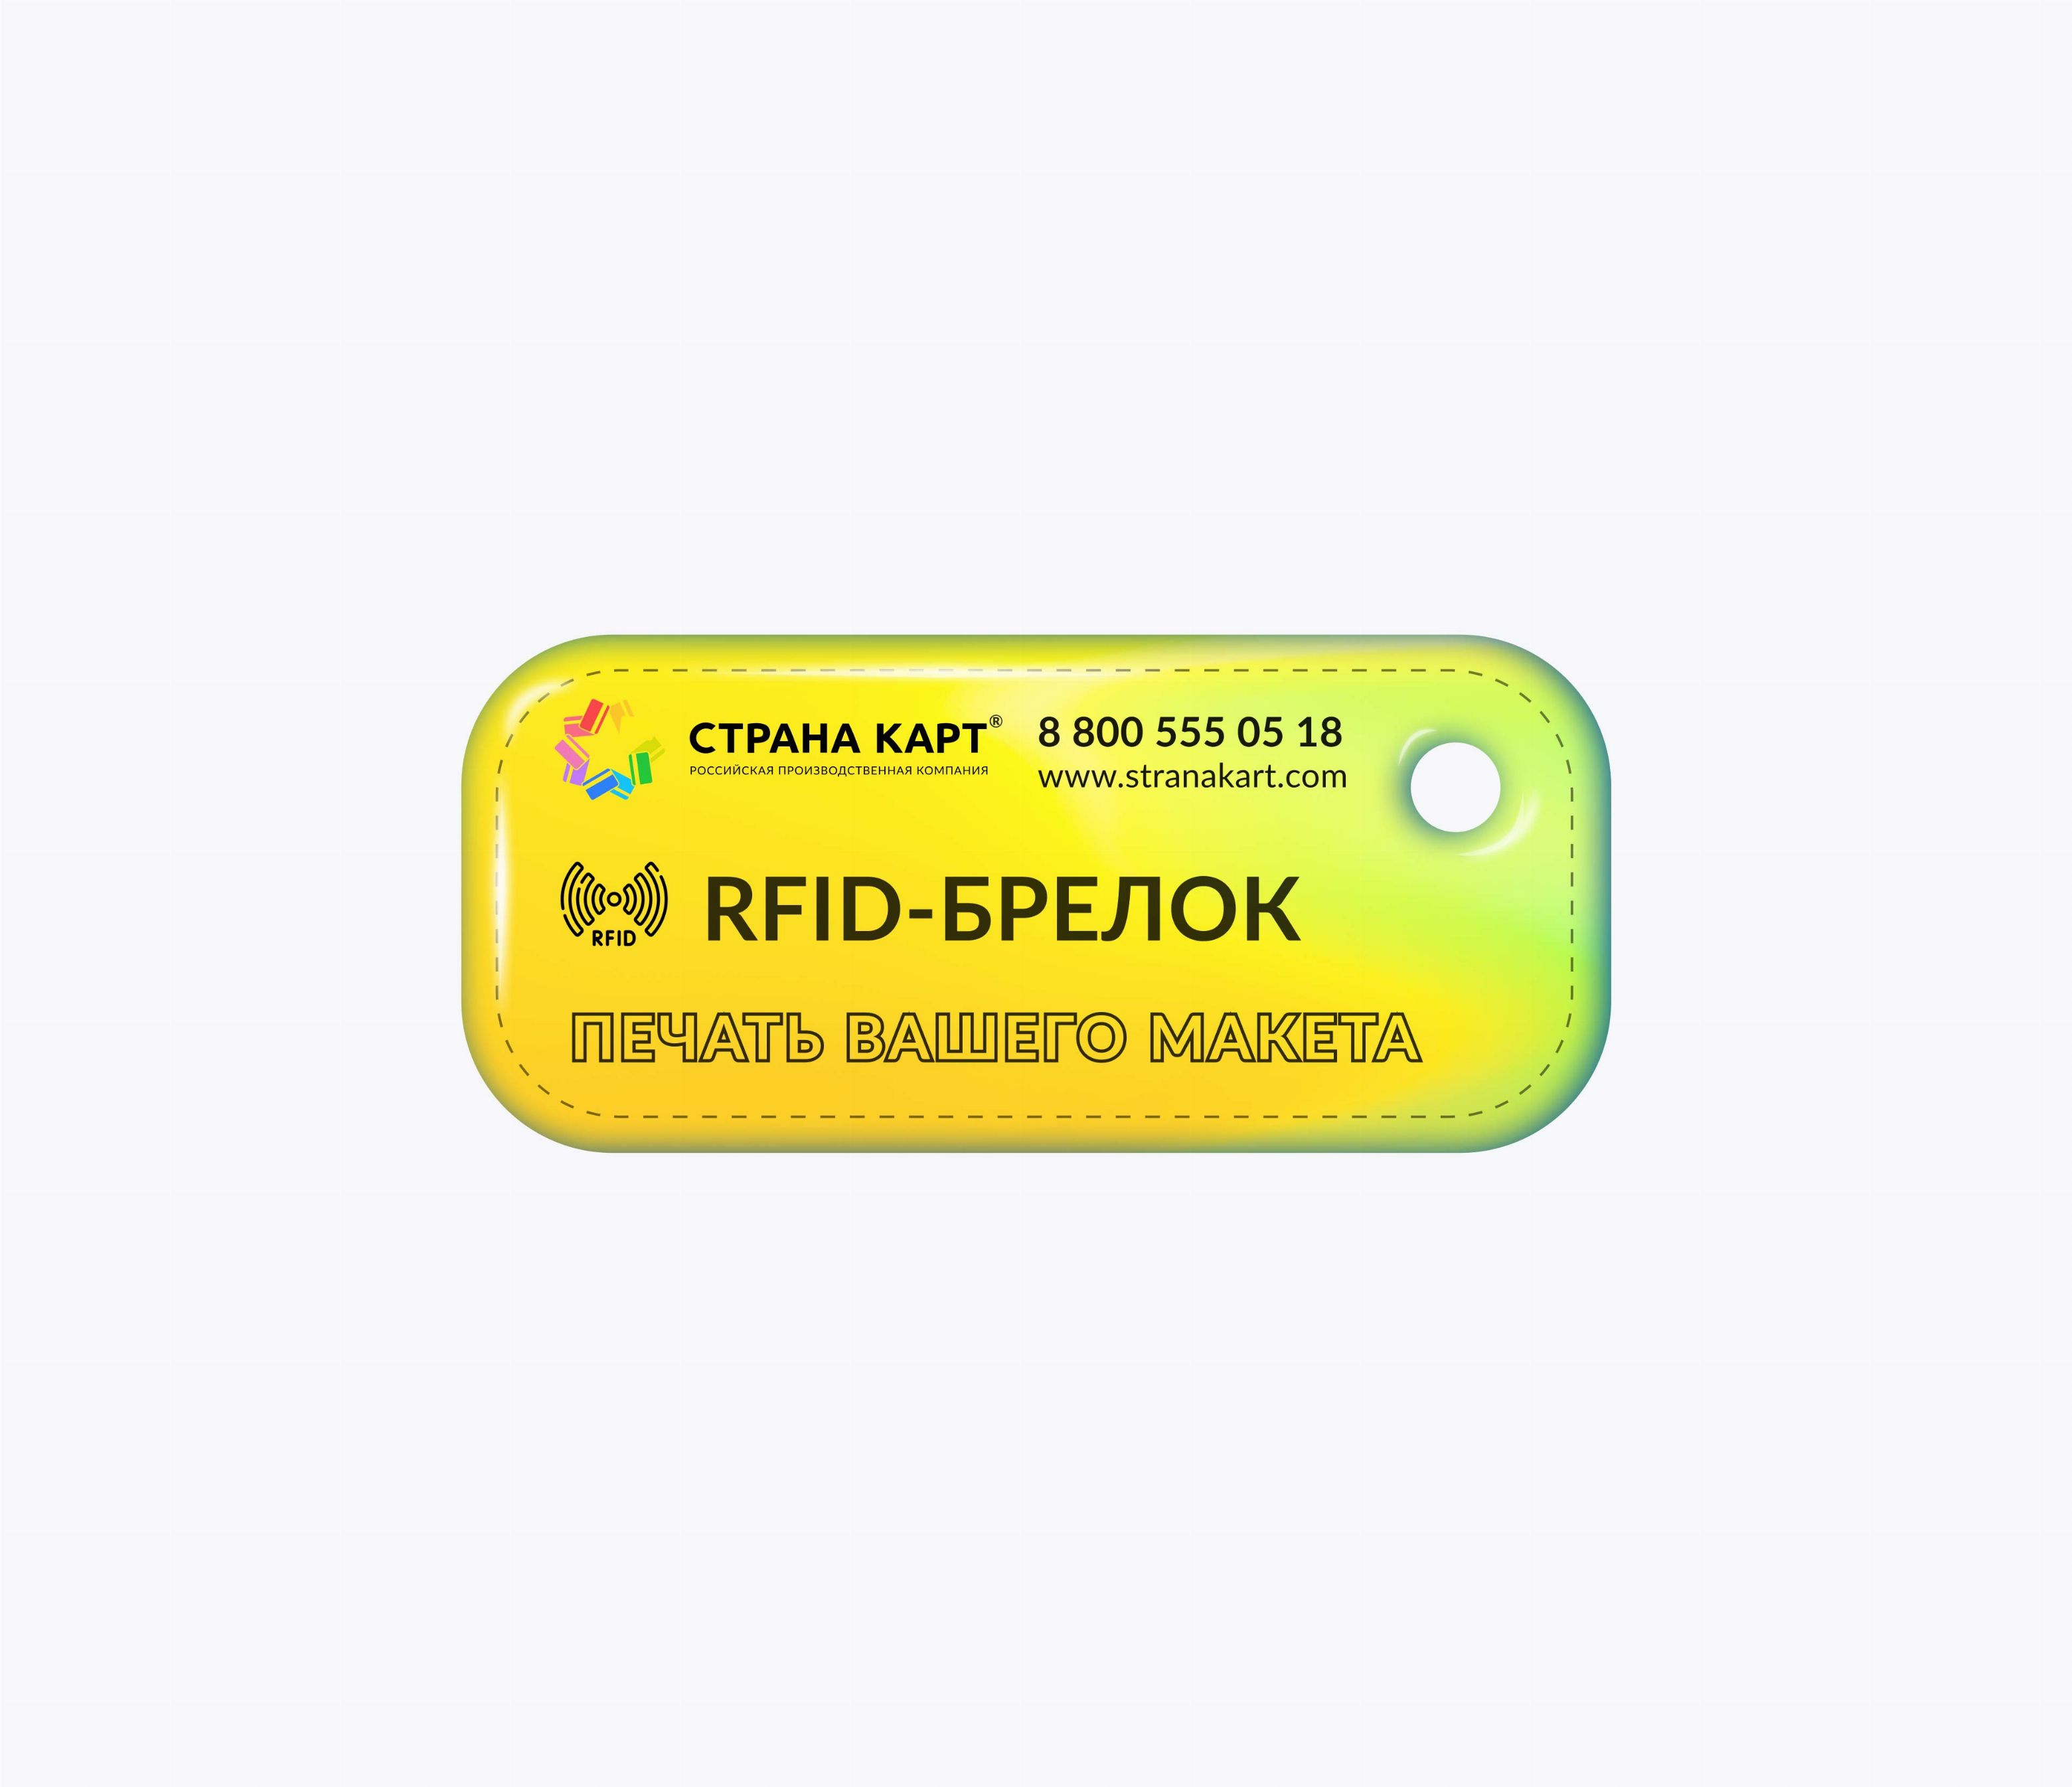 Прямоугольные мини RFID-брелоки NEOKEY® с чипом NXP MIFARE Ultralight EV1 7 byte UID RFID-брелоки NEOKEY® с чипом NXP MIFARE Ultralight EV1 7 byte UID и вашим логотипом